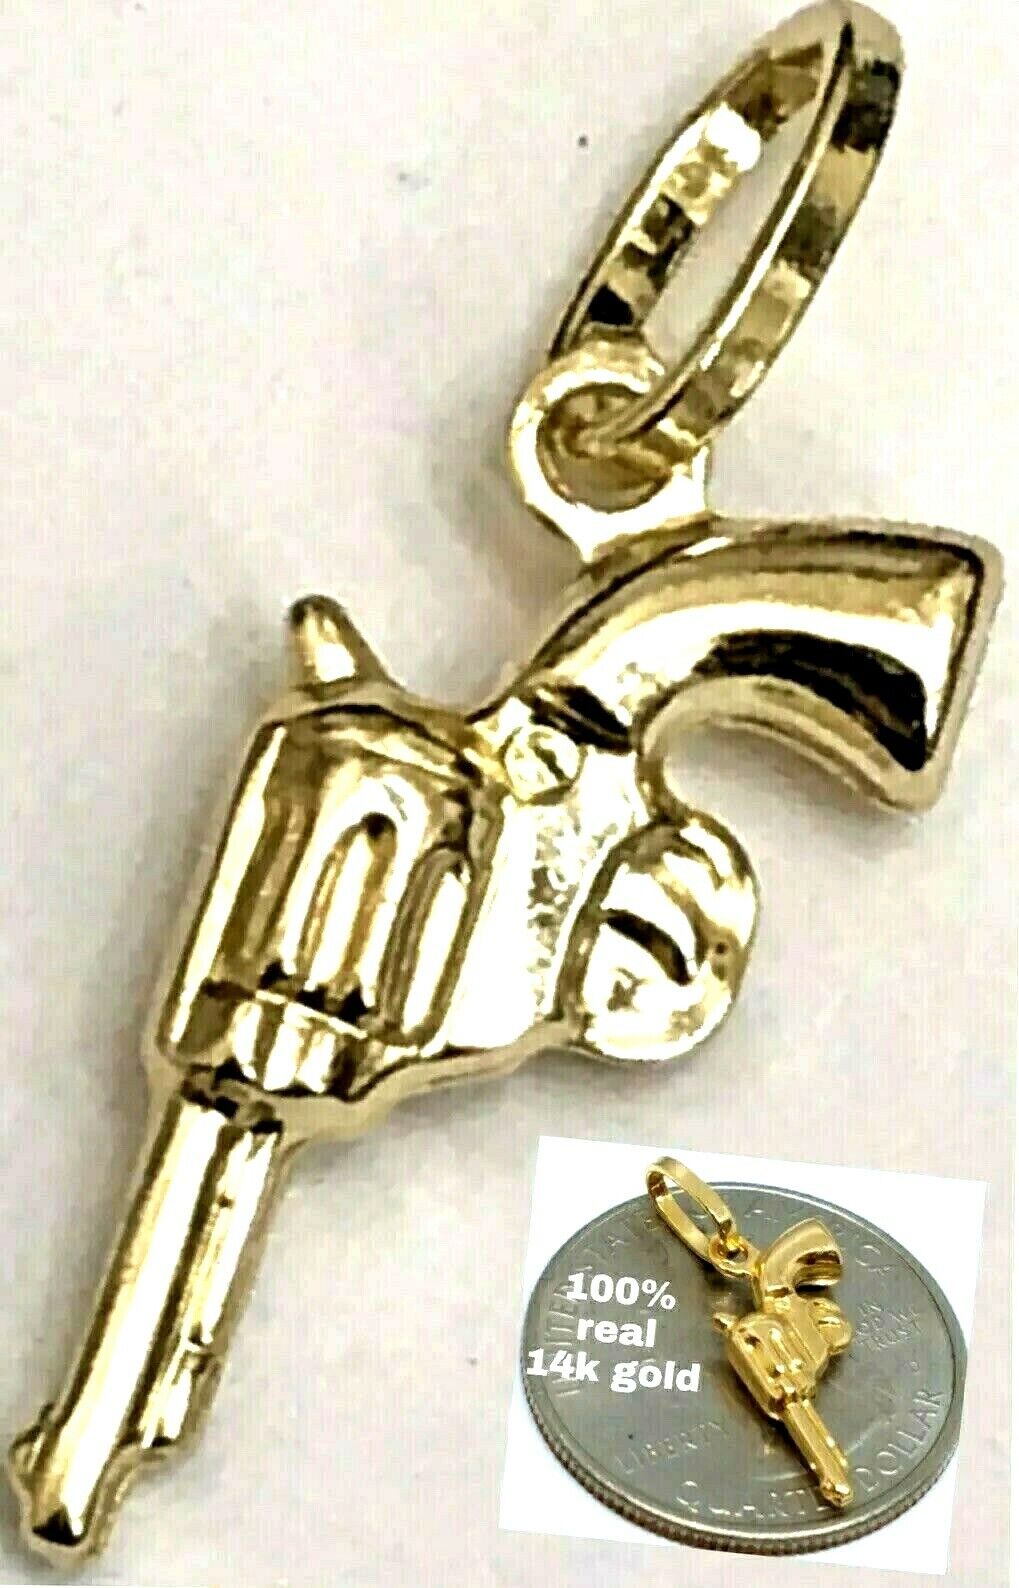 GOLd 14k Gun Handgun Revolver Pistol Charm Pendant necklace colt weapon 1” Small